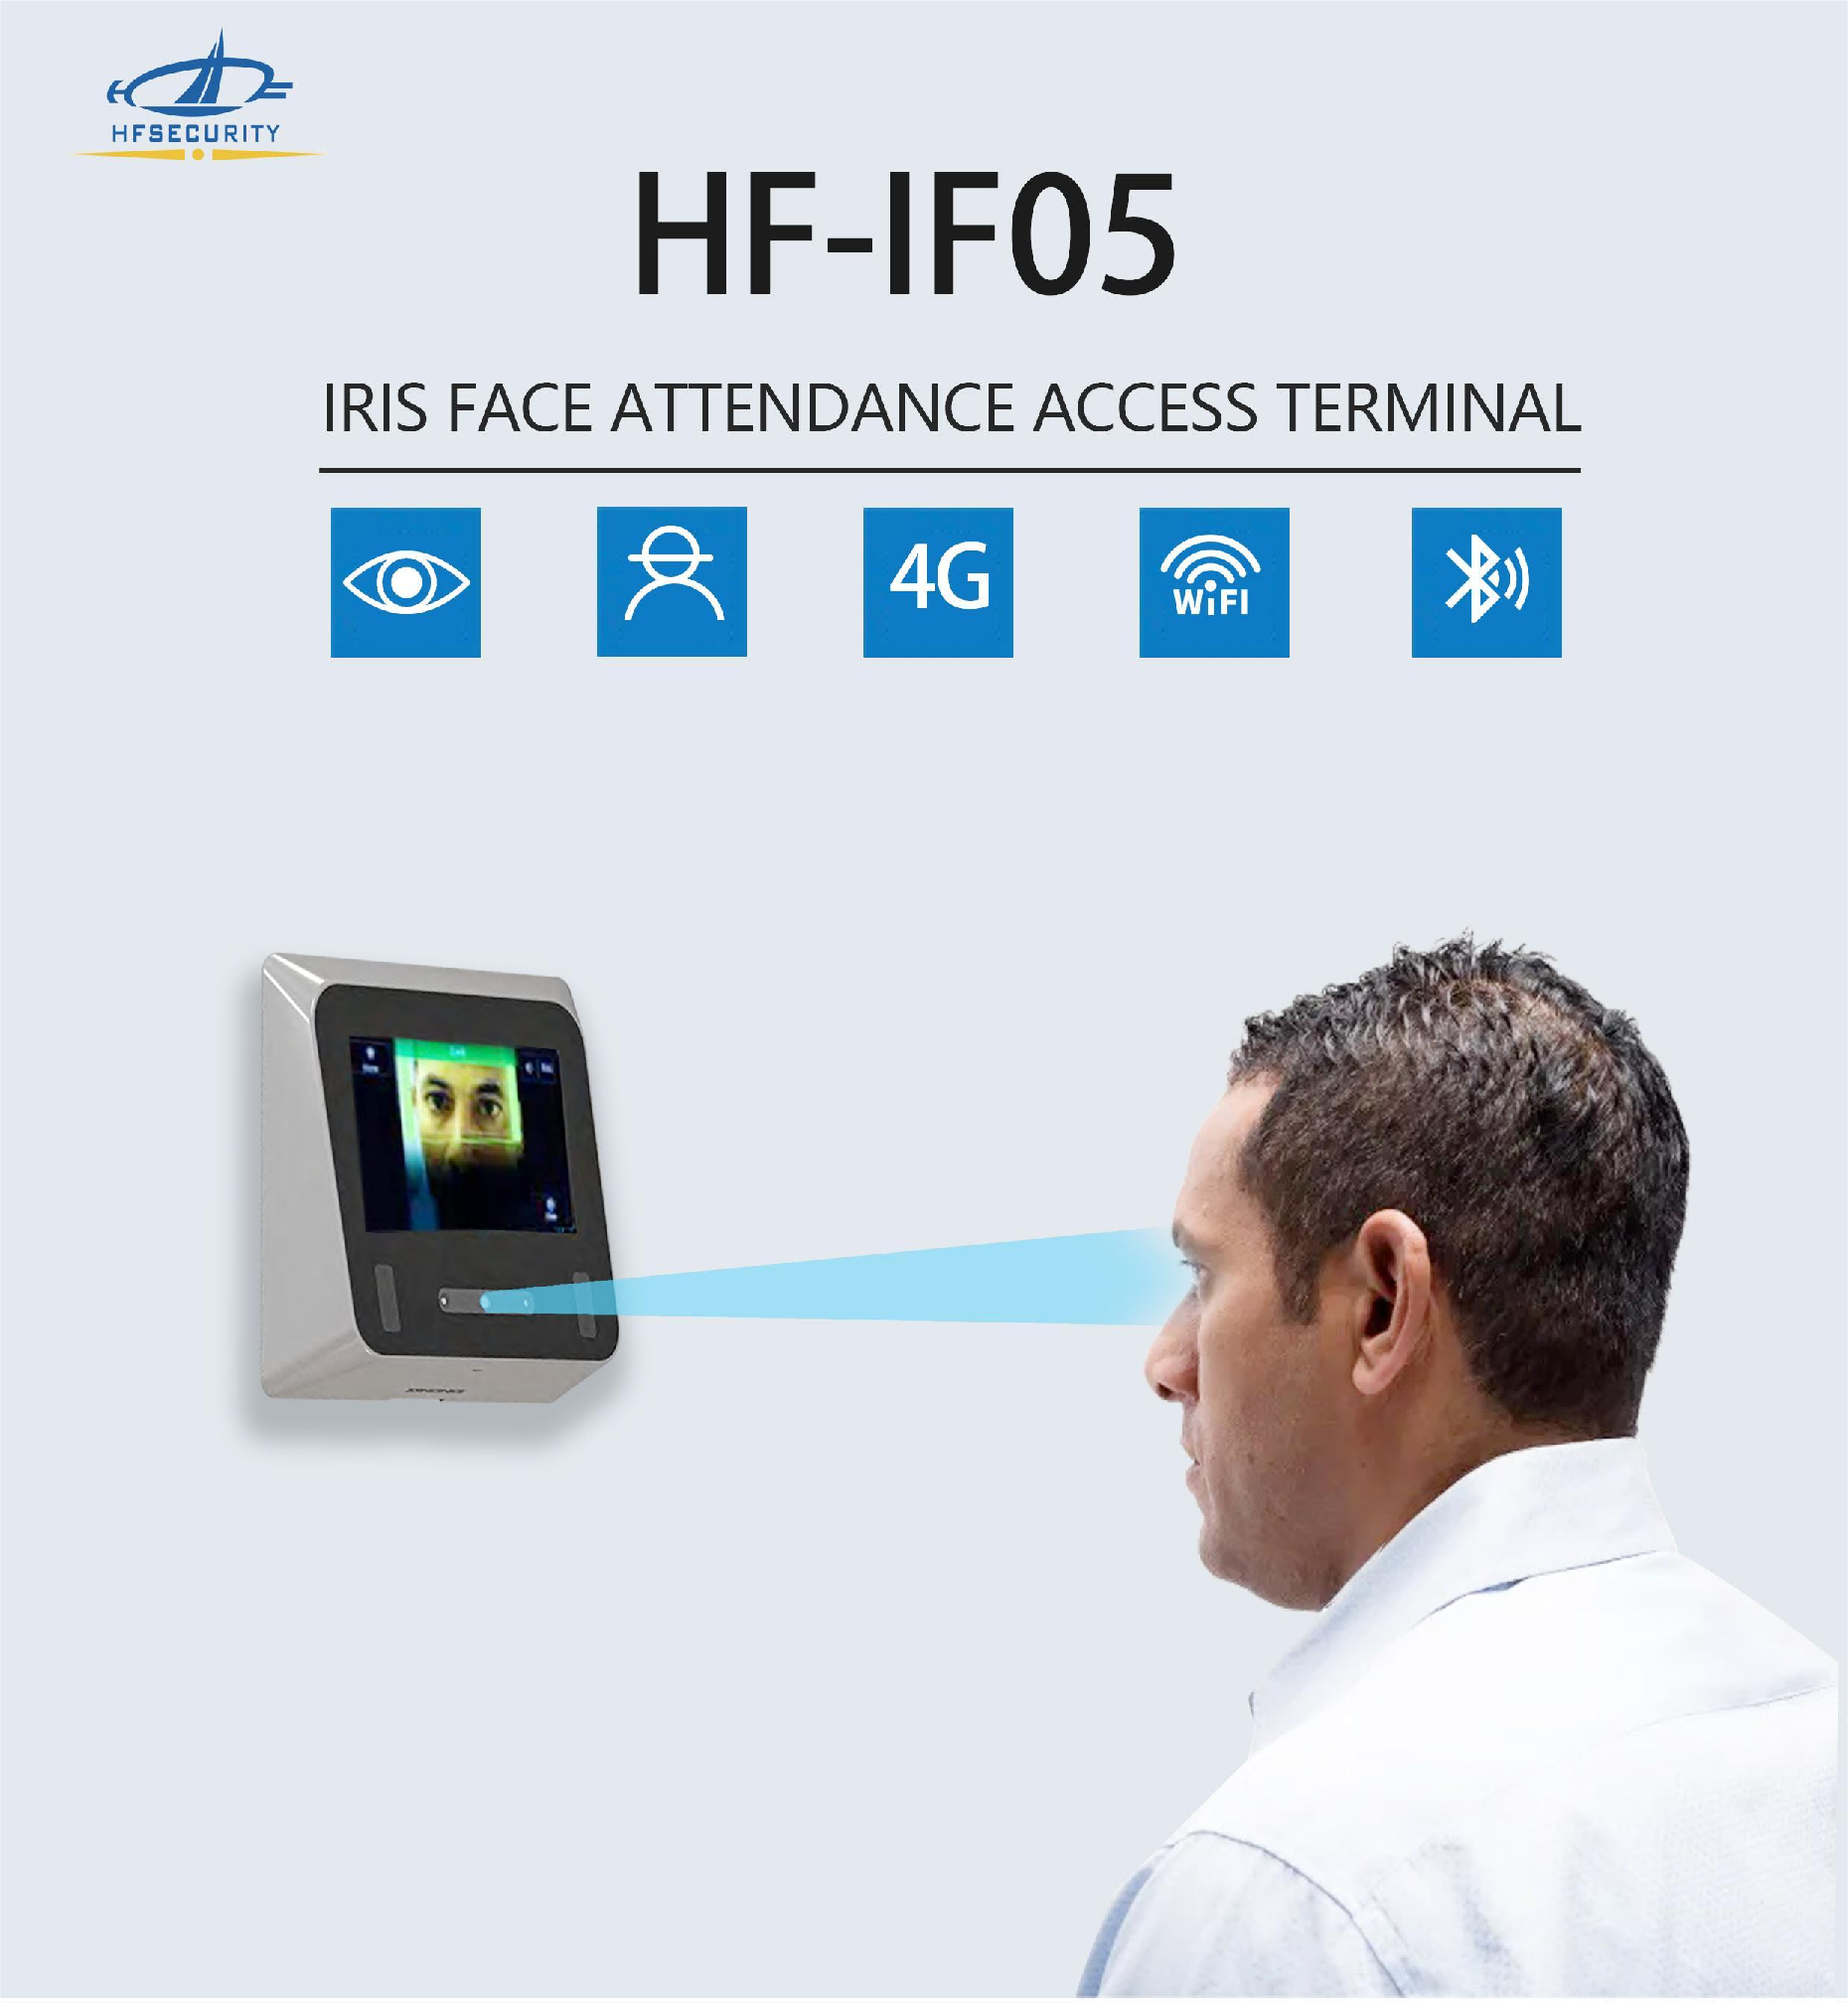 iris face recognition attendance access terminal